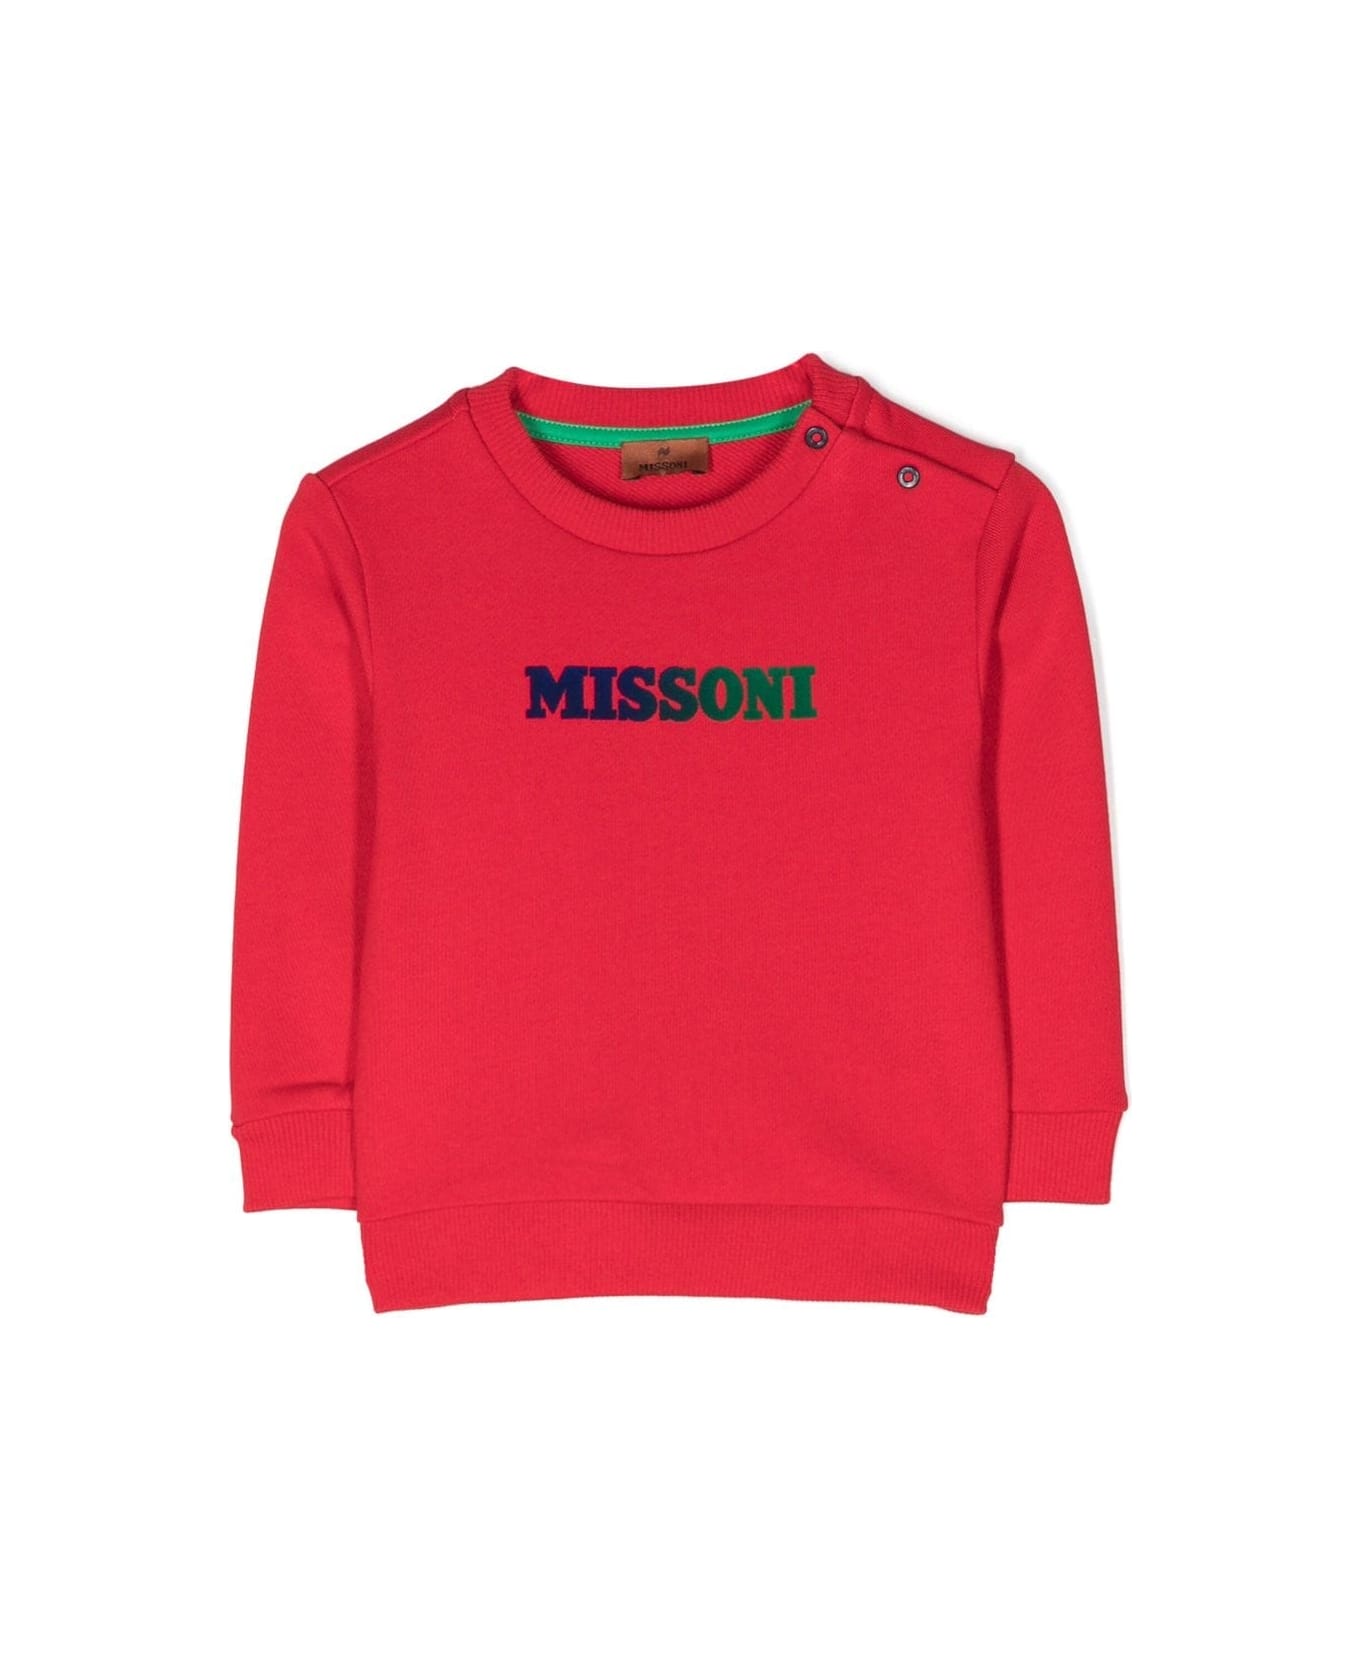 Missoni Kids Sweatshirt With Print - Red